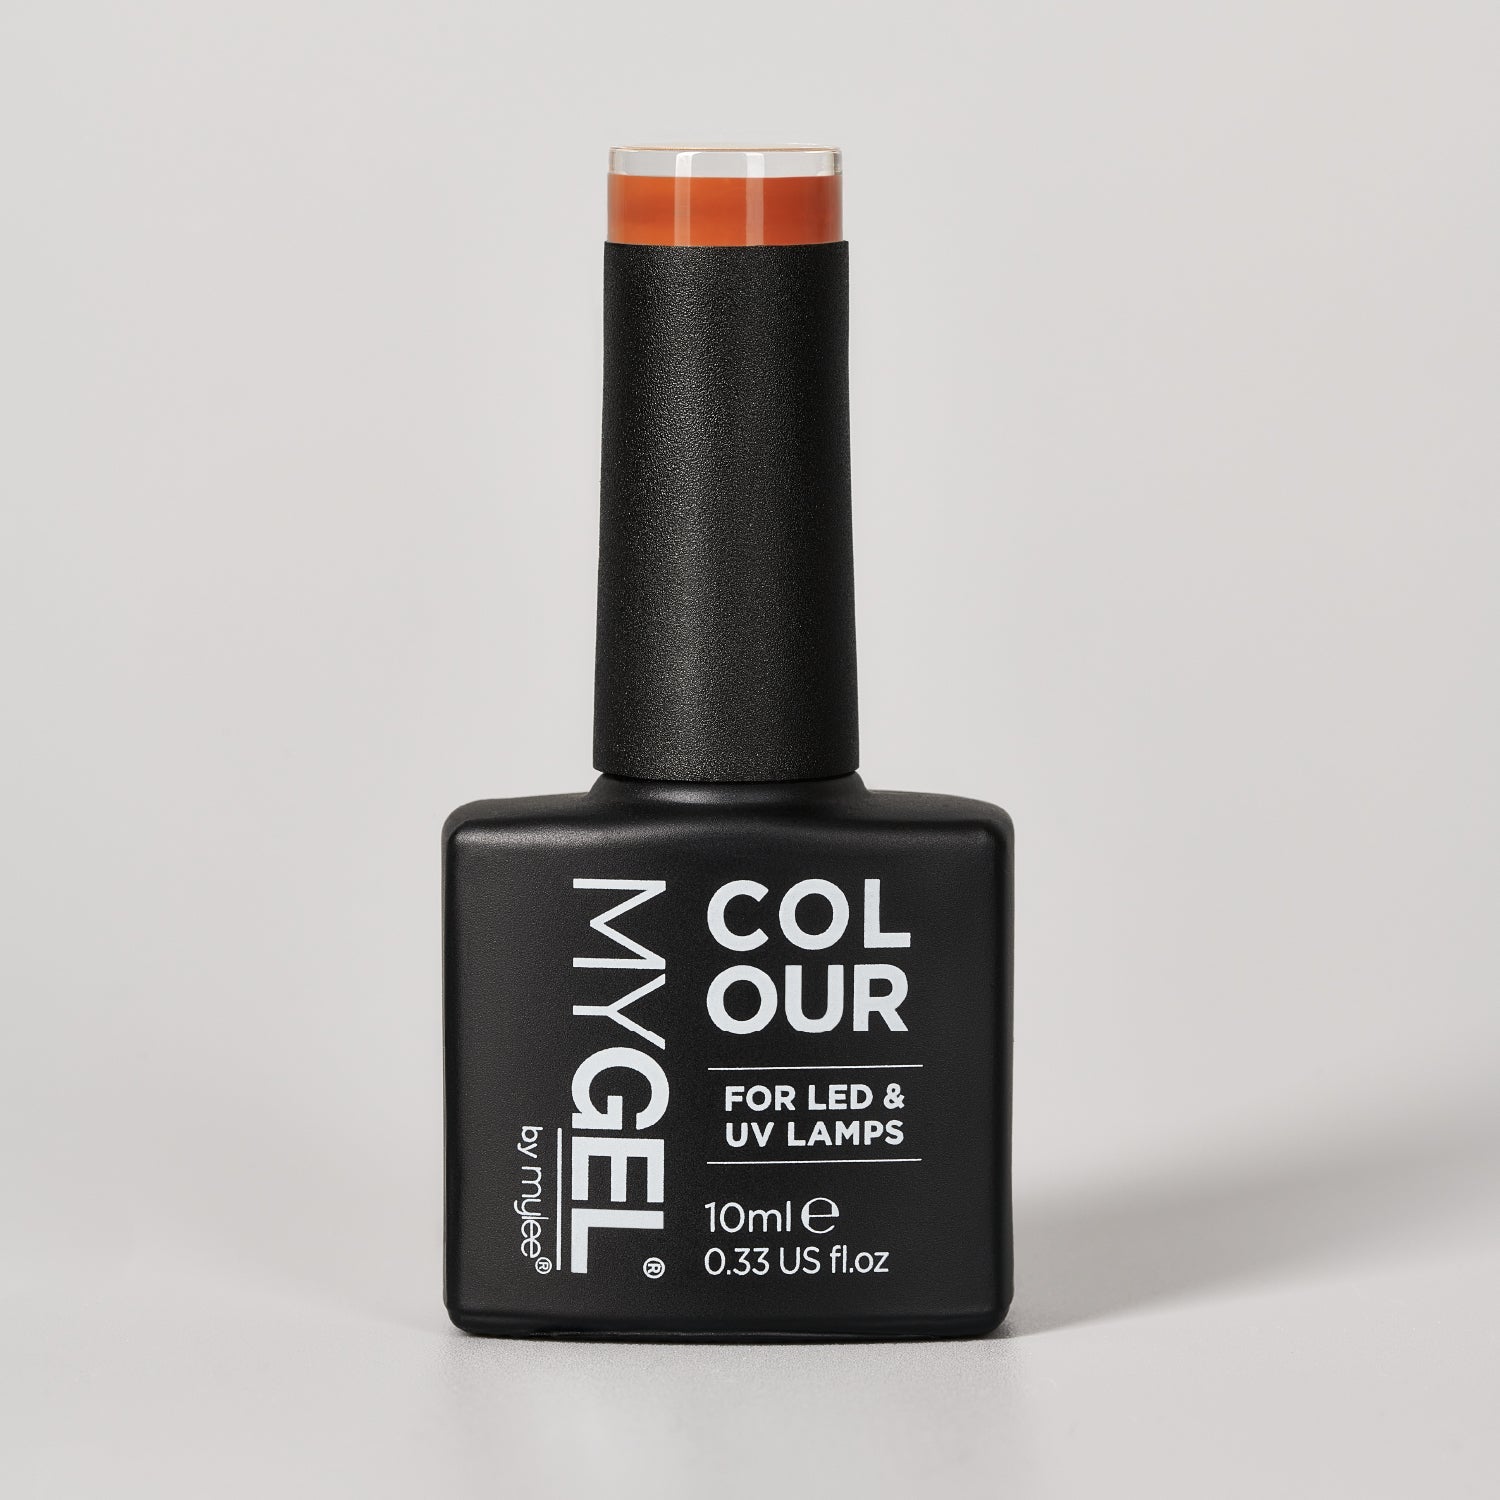 Mylee Earthy Vibe LED/UV Coral / Brown Gold Gel Nail Polish 10ml – Long Lasting At Home Manicure/Pedicure, High Gloss And Chip Free Wear Nail Varnish